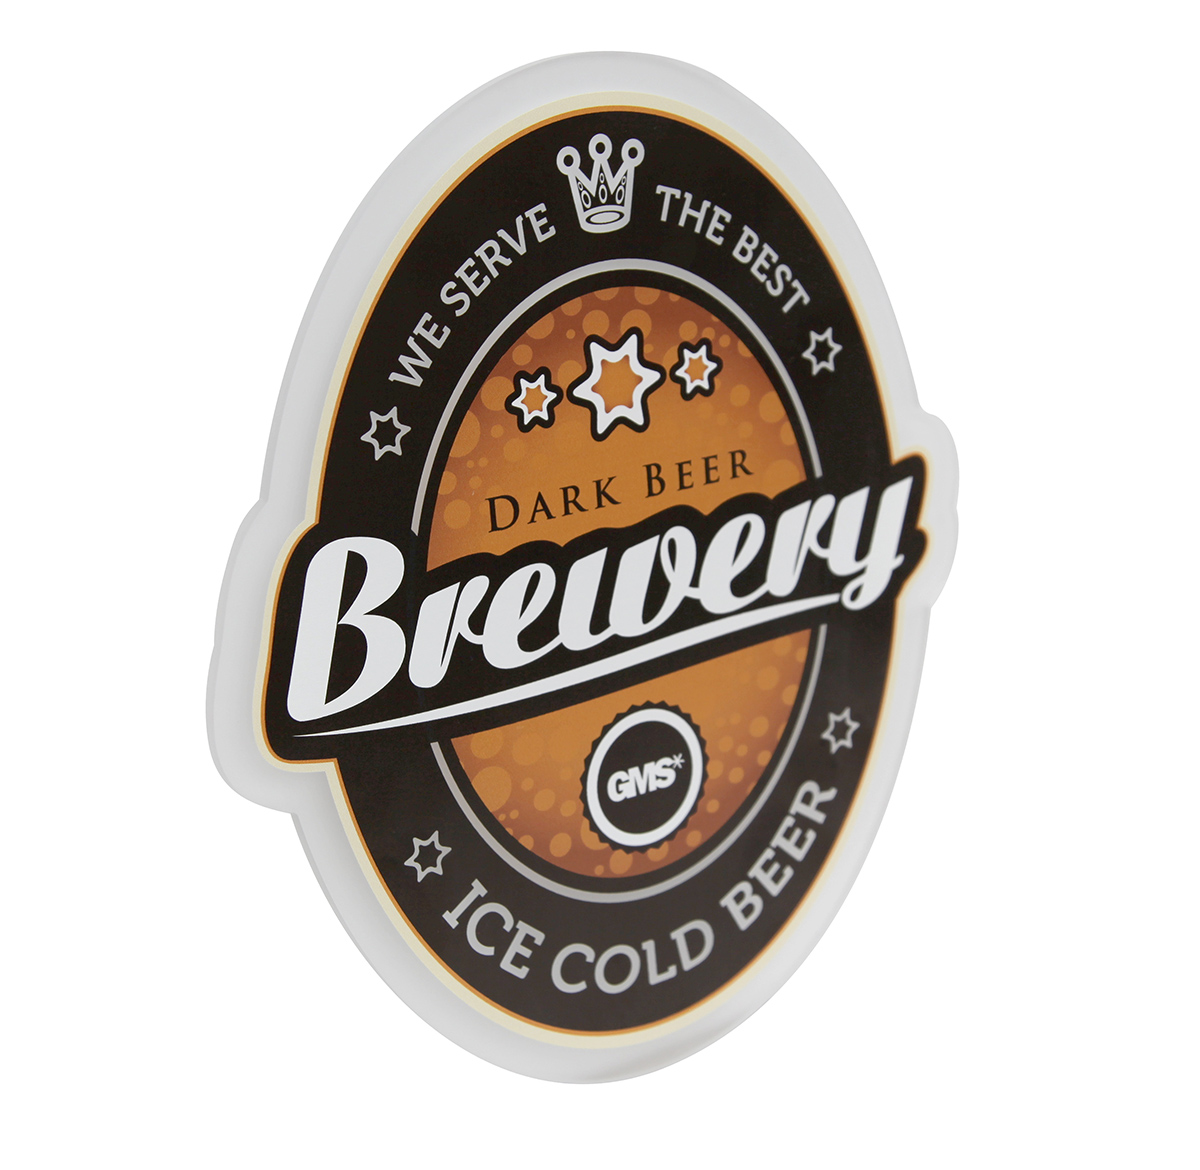 Dark Beer Brewery – Product label